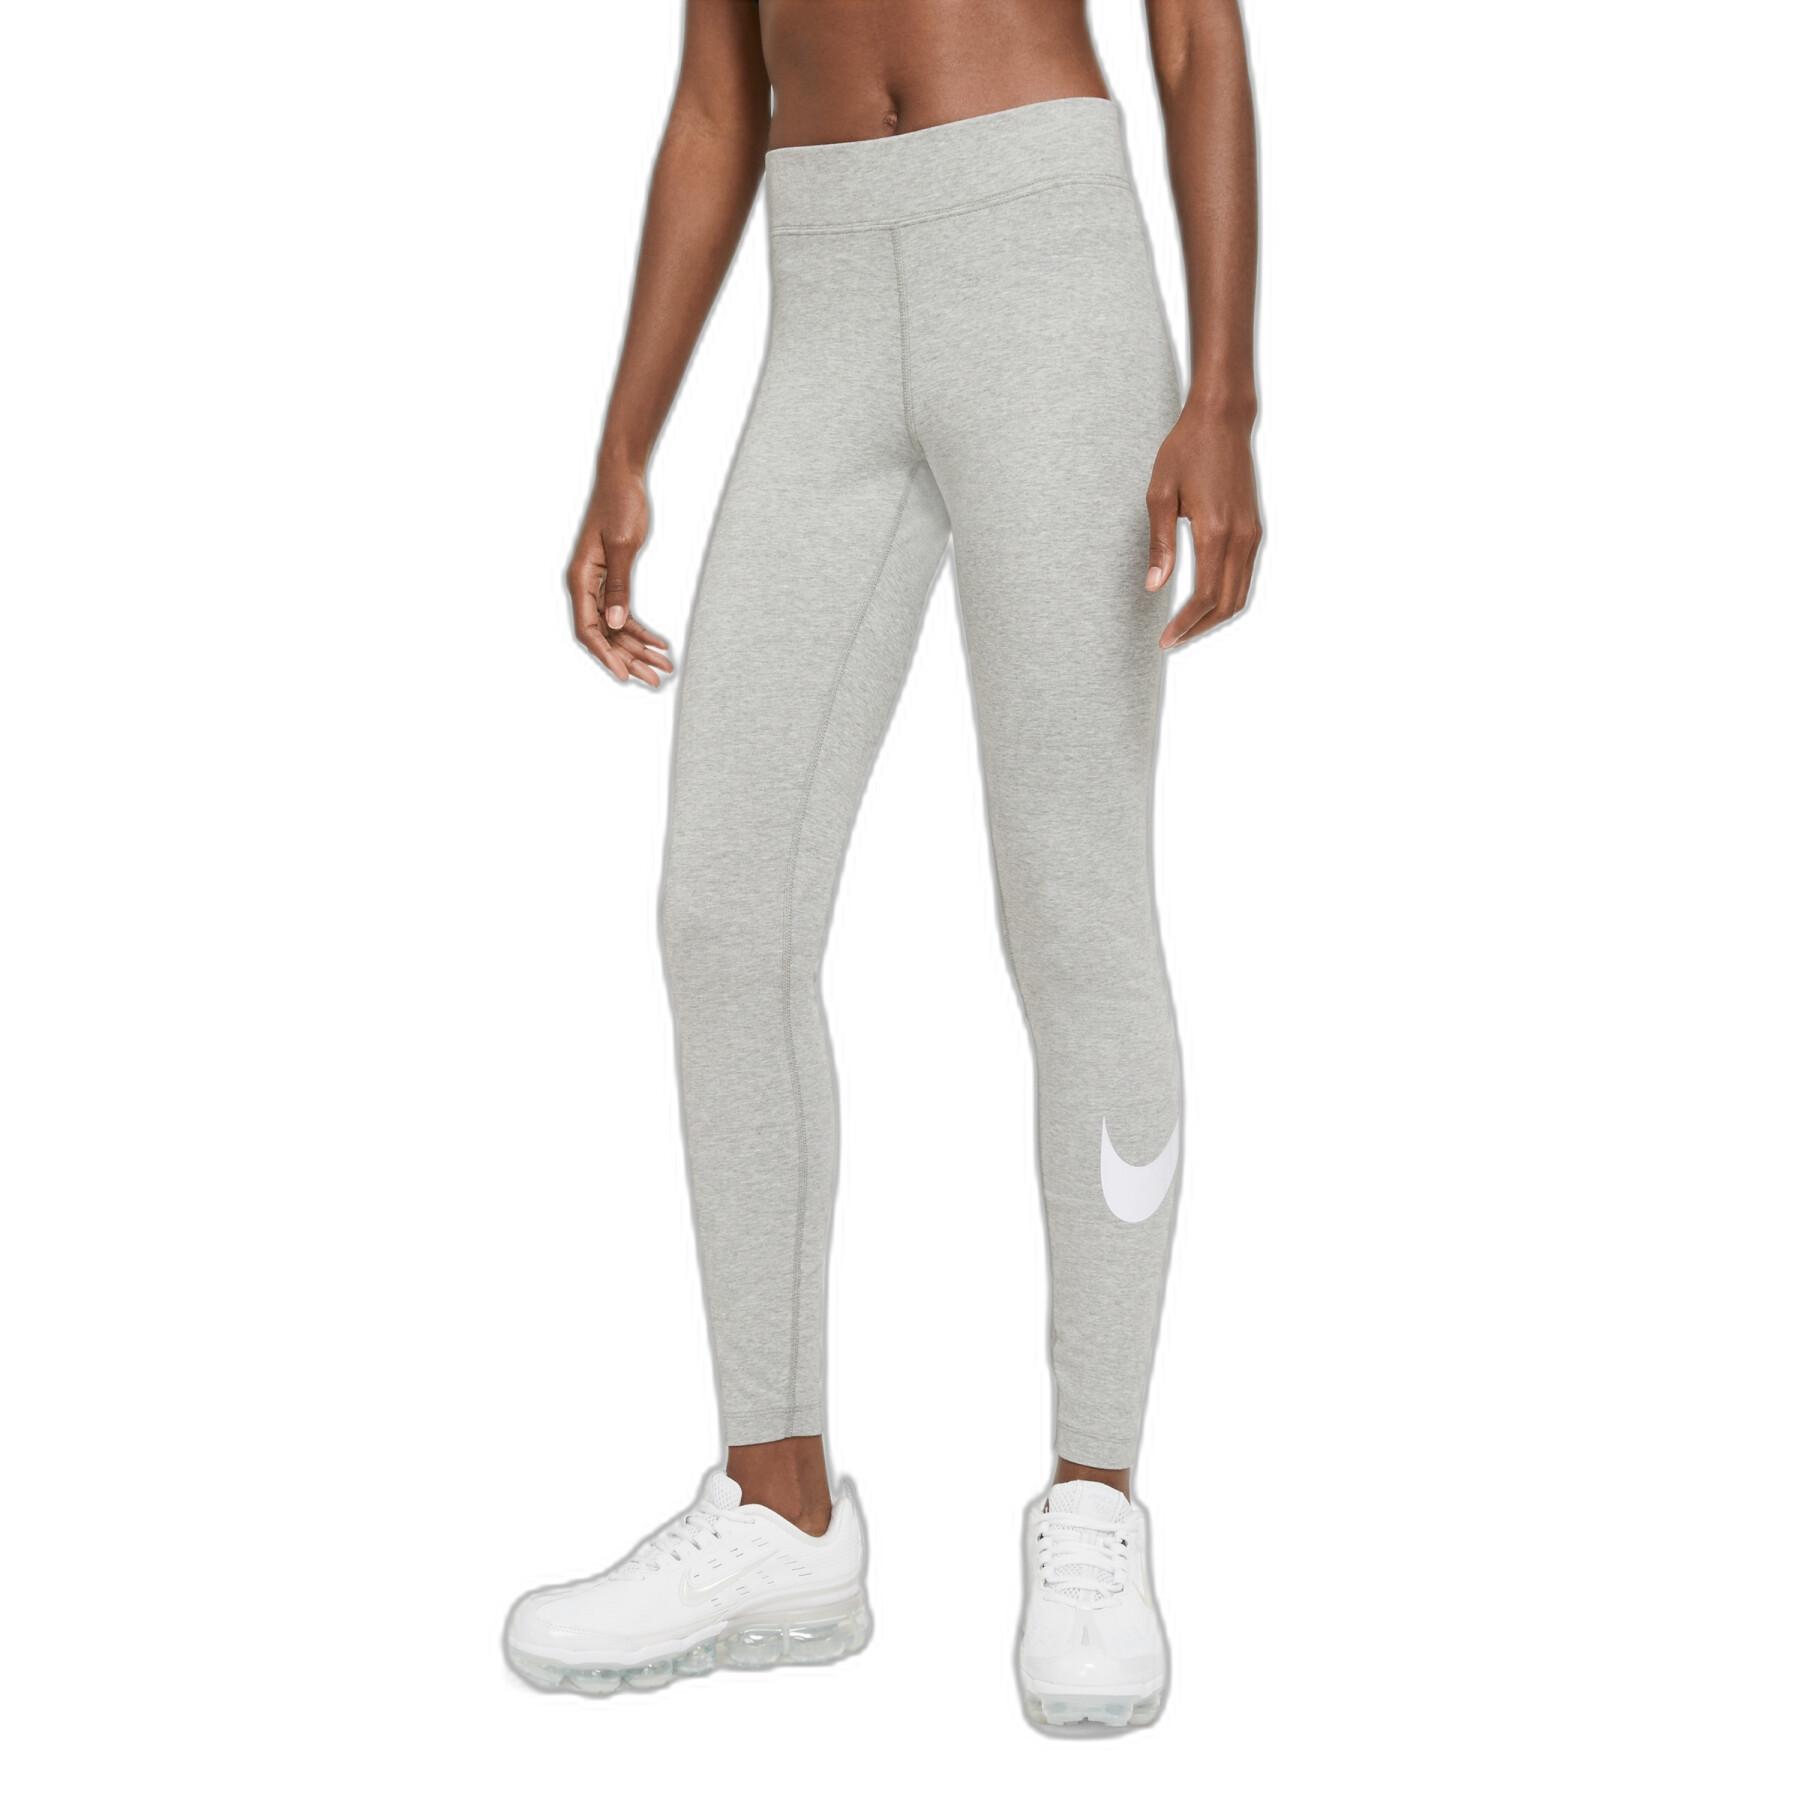 Legging woman Nike Sportswear Essential - Nike - Brands - Handball wear